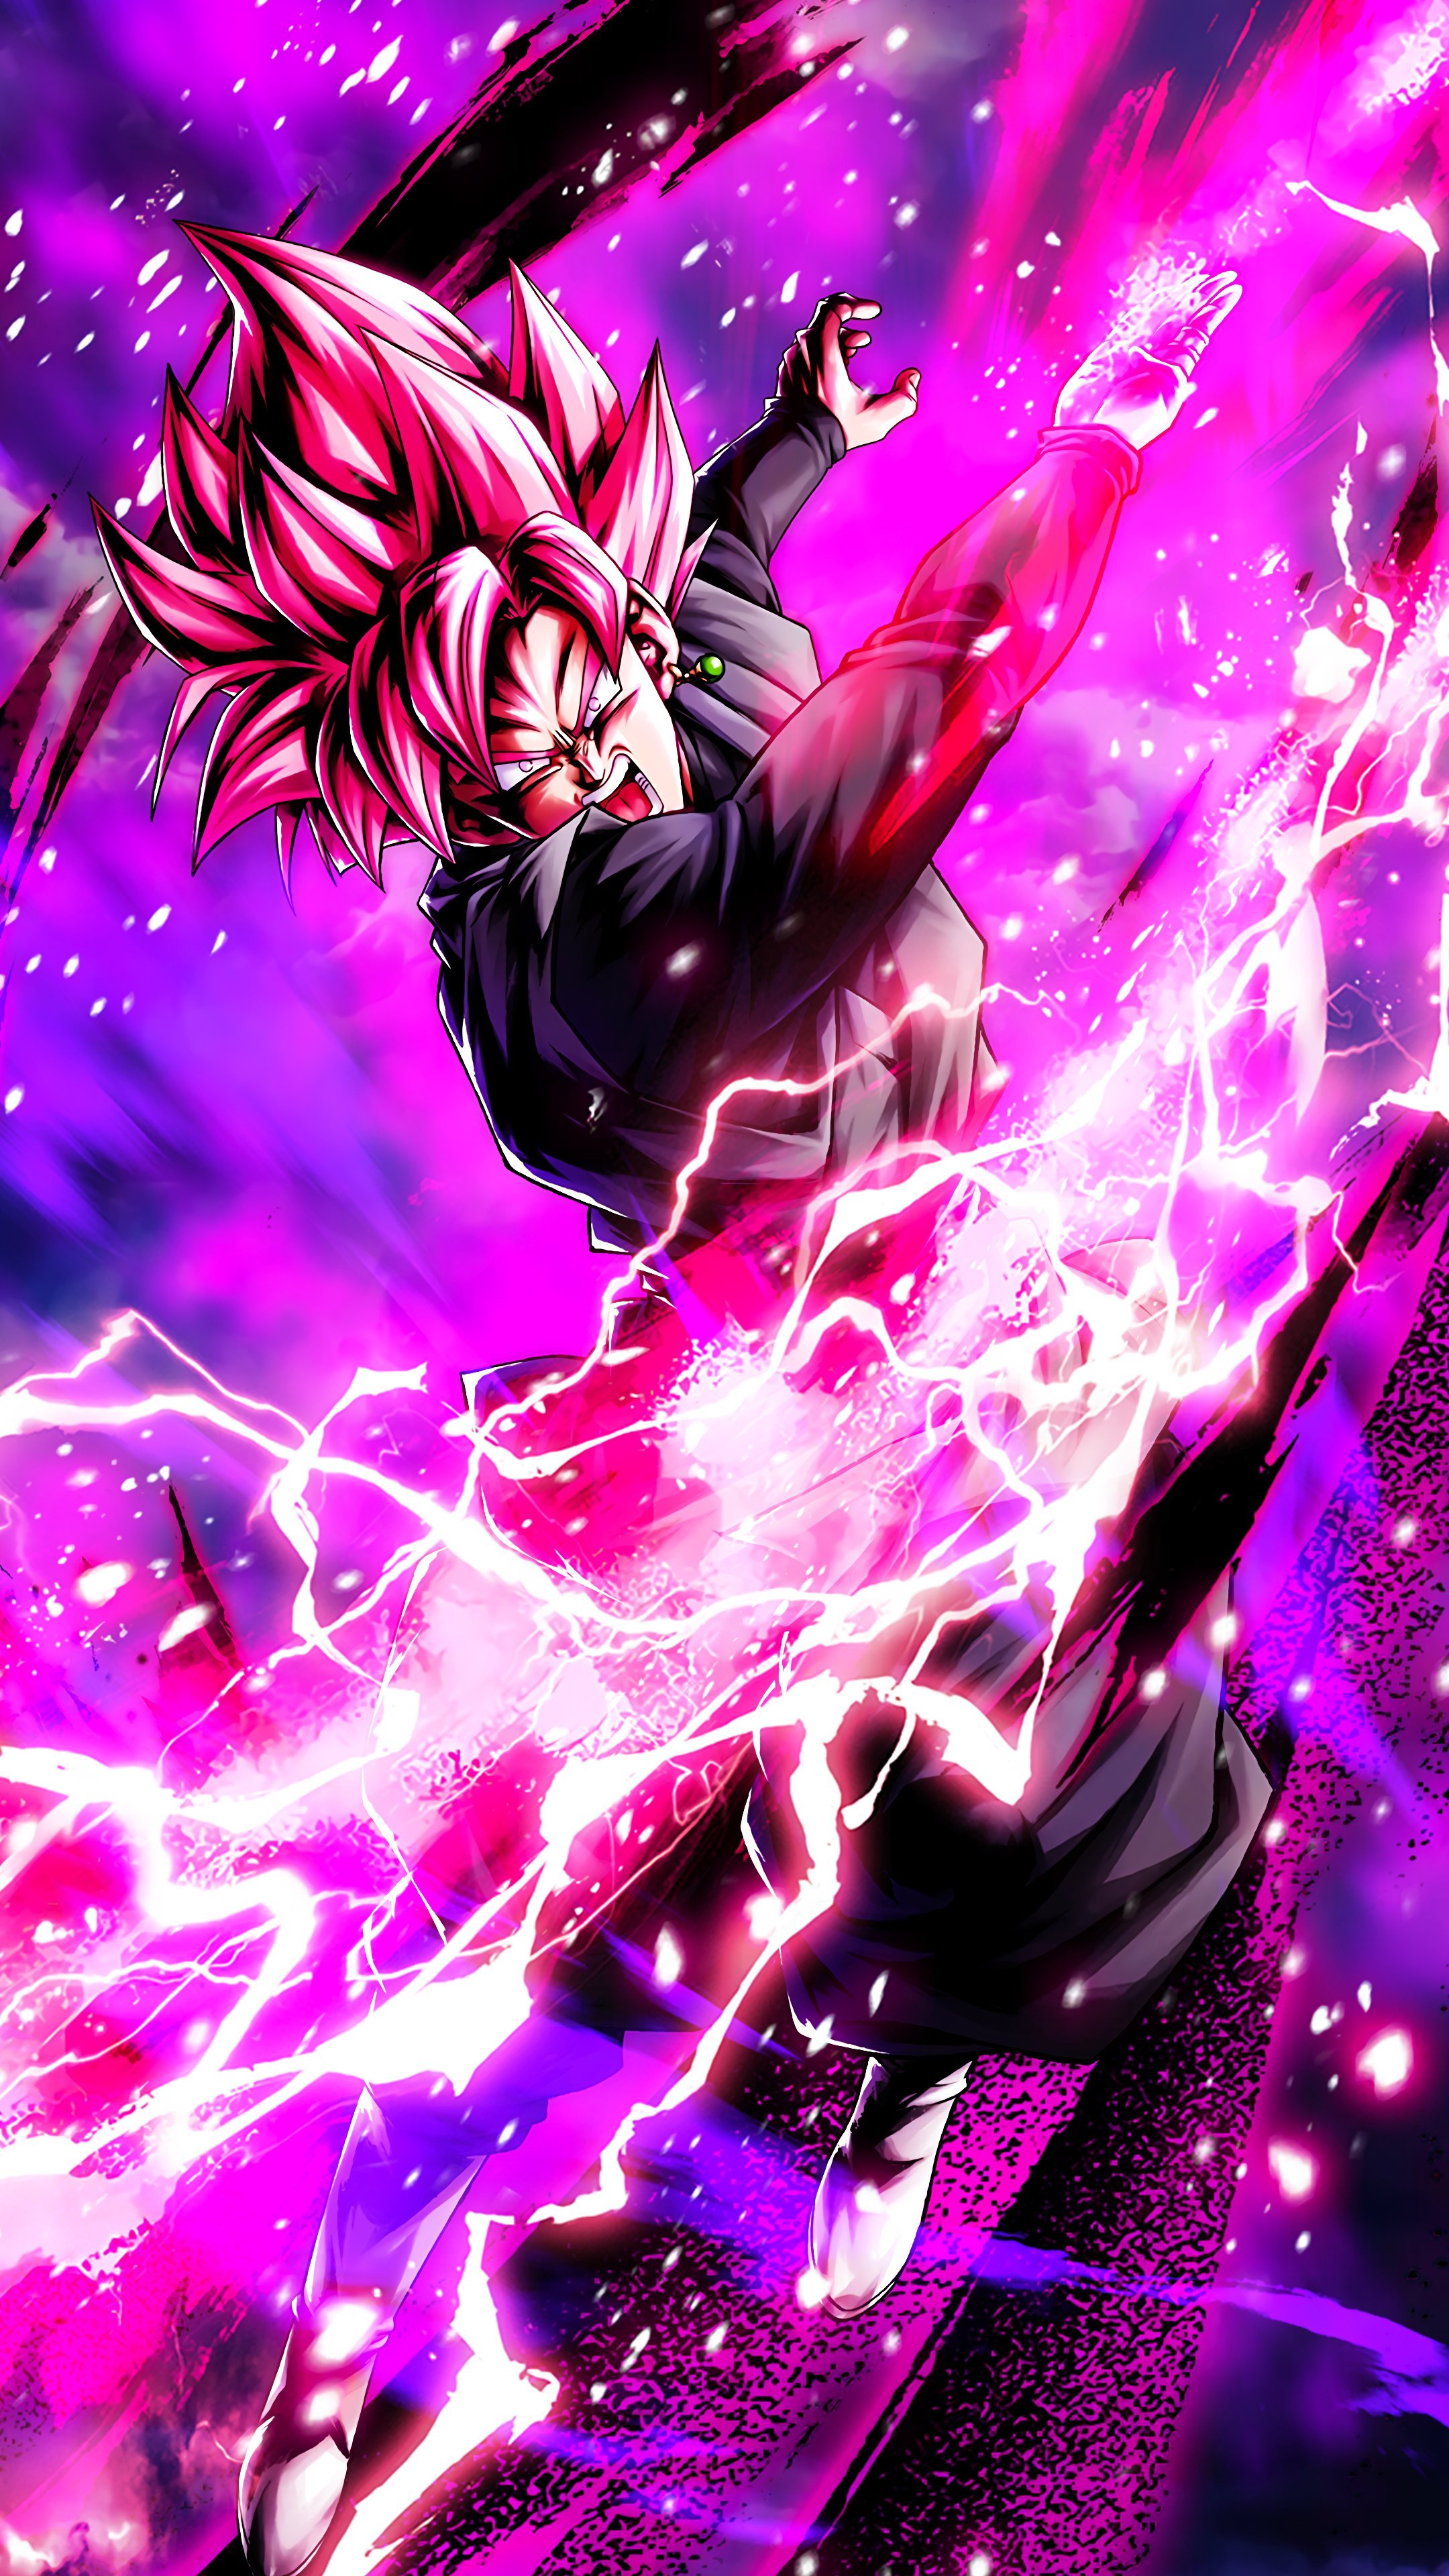 John Goku Black (Rose) (PostTransformation) Character Art + 4K PC Wallpaper + 4K Phone Wallpaper! #DBLegends #DragonBallLegends